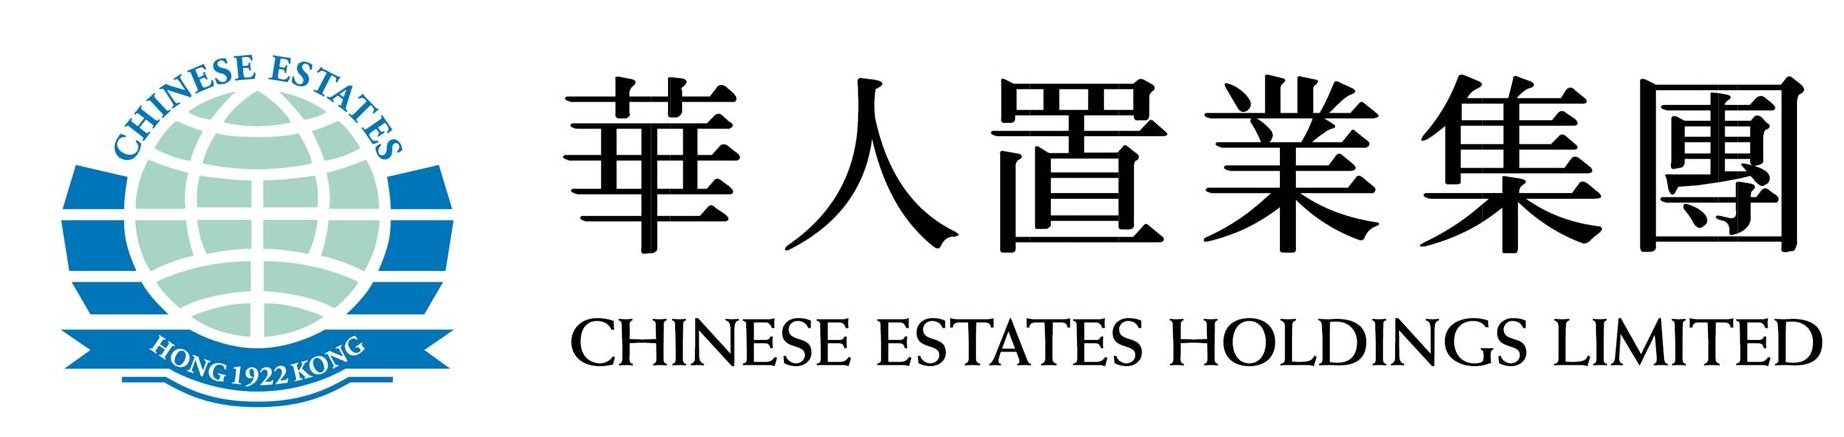 Self Photos / Files - Chinese Estates Holdings